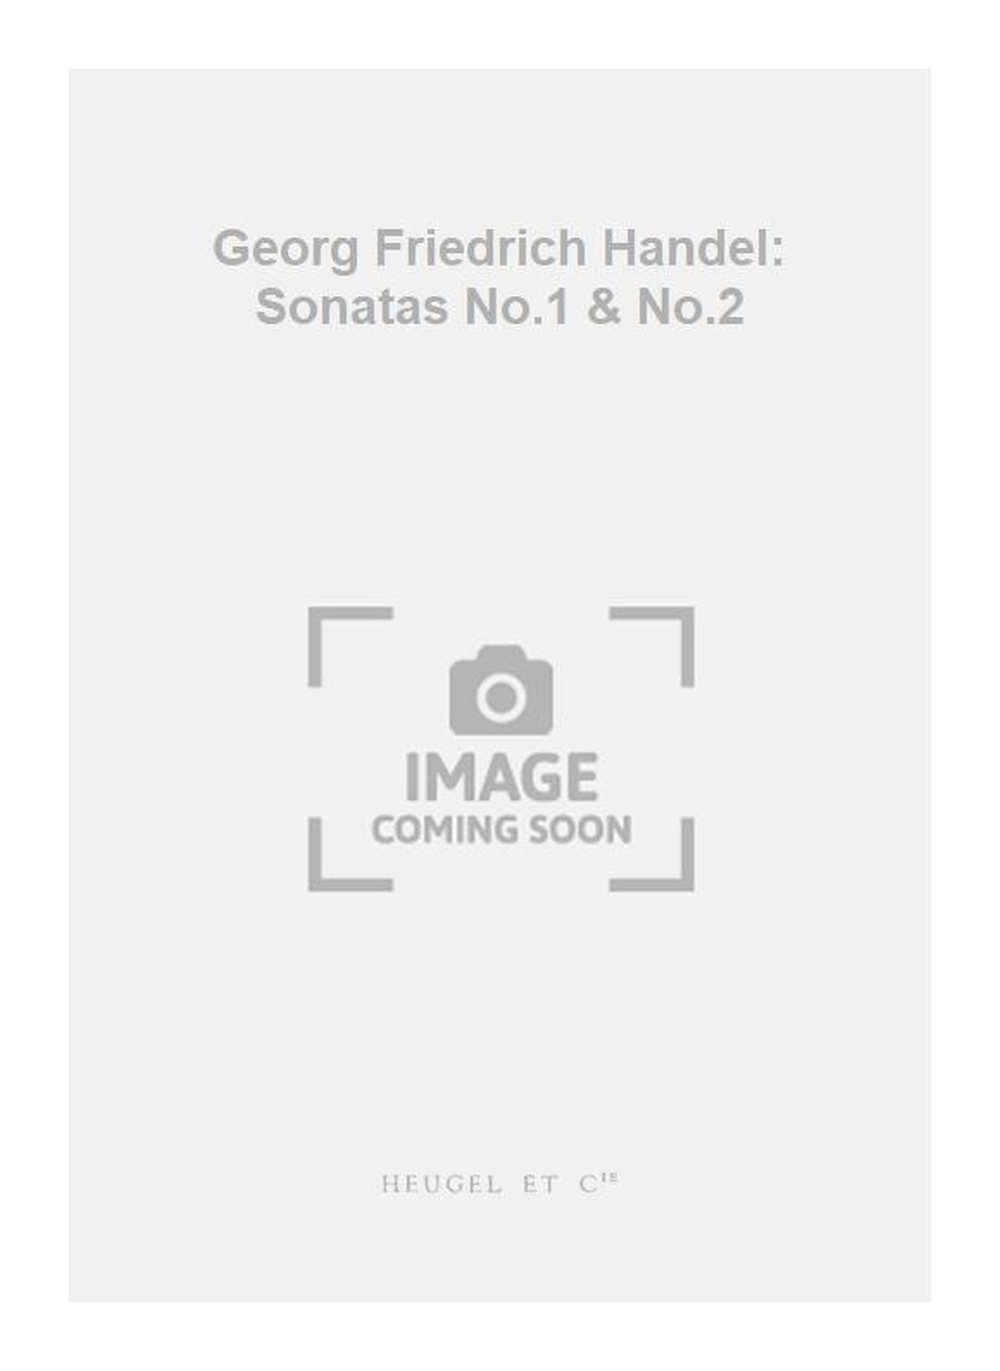 Georg Friedrich Hndel: Georg Friedrich Handel: Sonatas No.1 & No.2